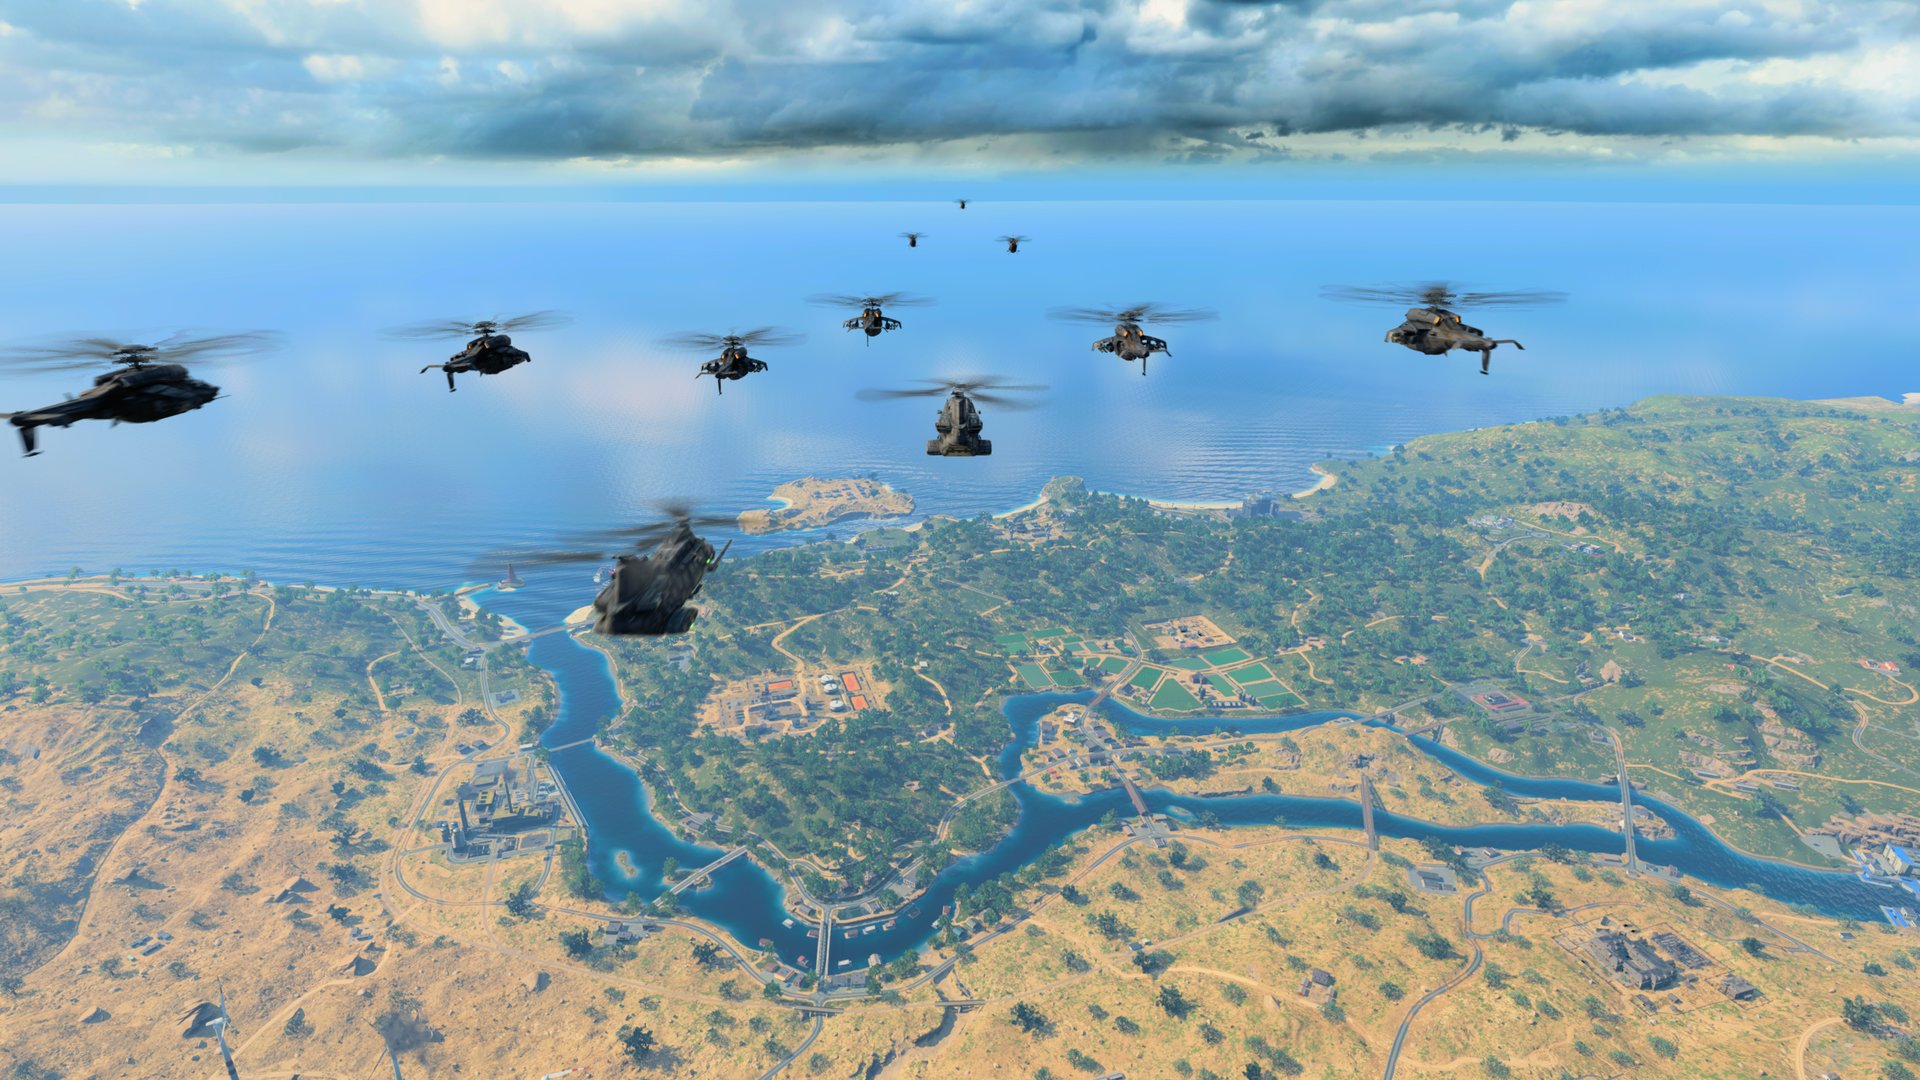 Call of Duty: Black Ops 4 im Technik-Test